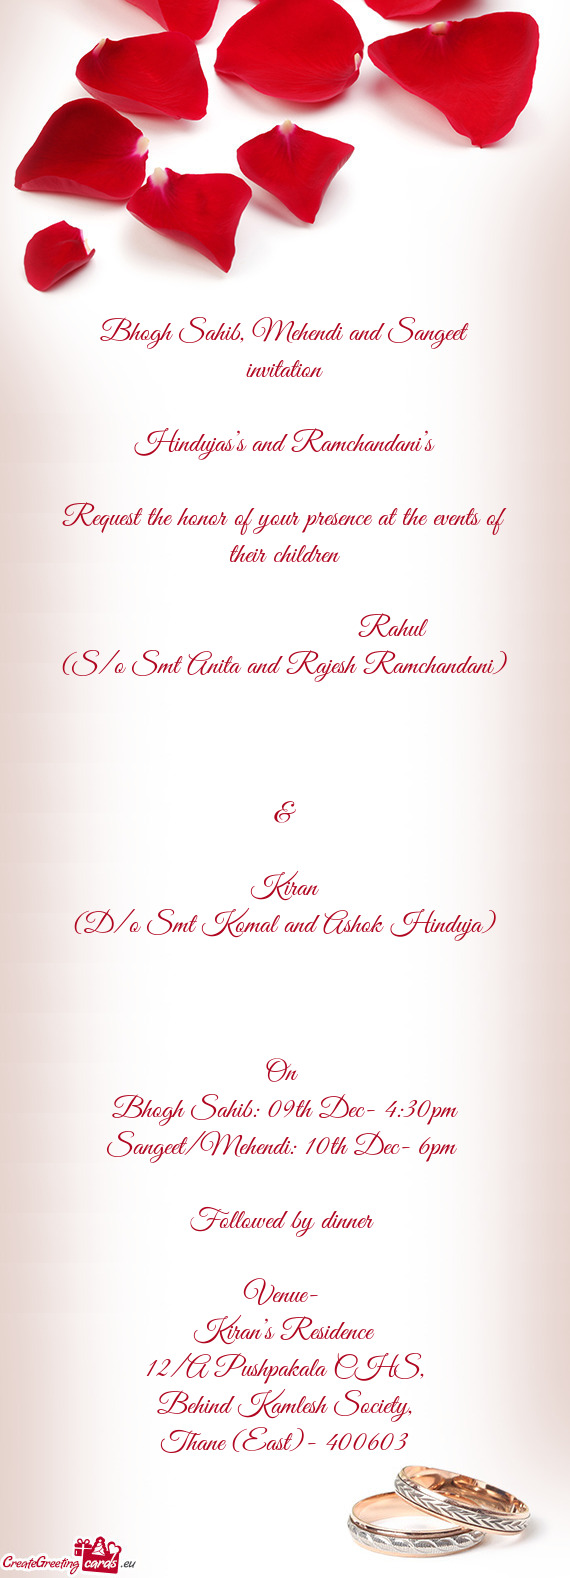 Bhogh Sahib, Mehendi and Sangeet invitation